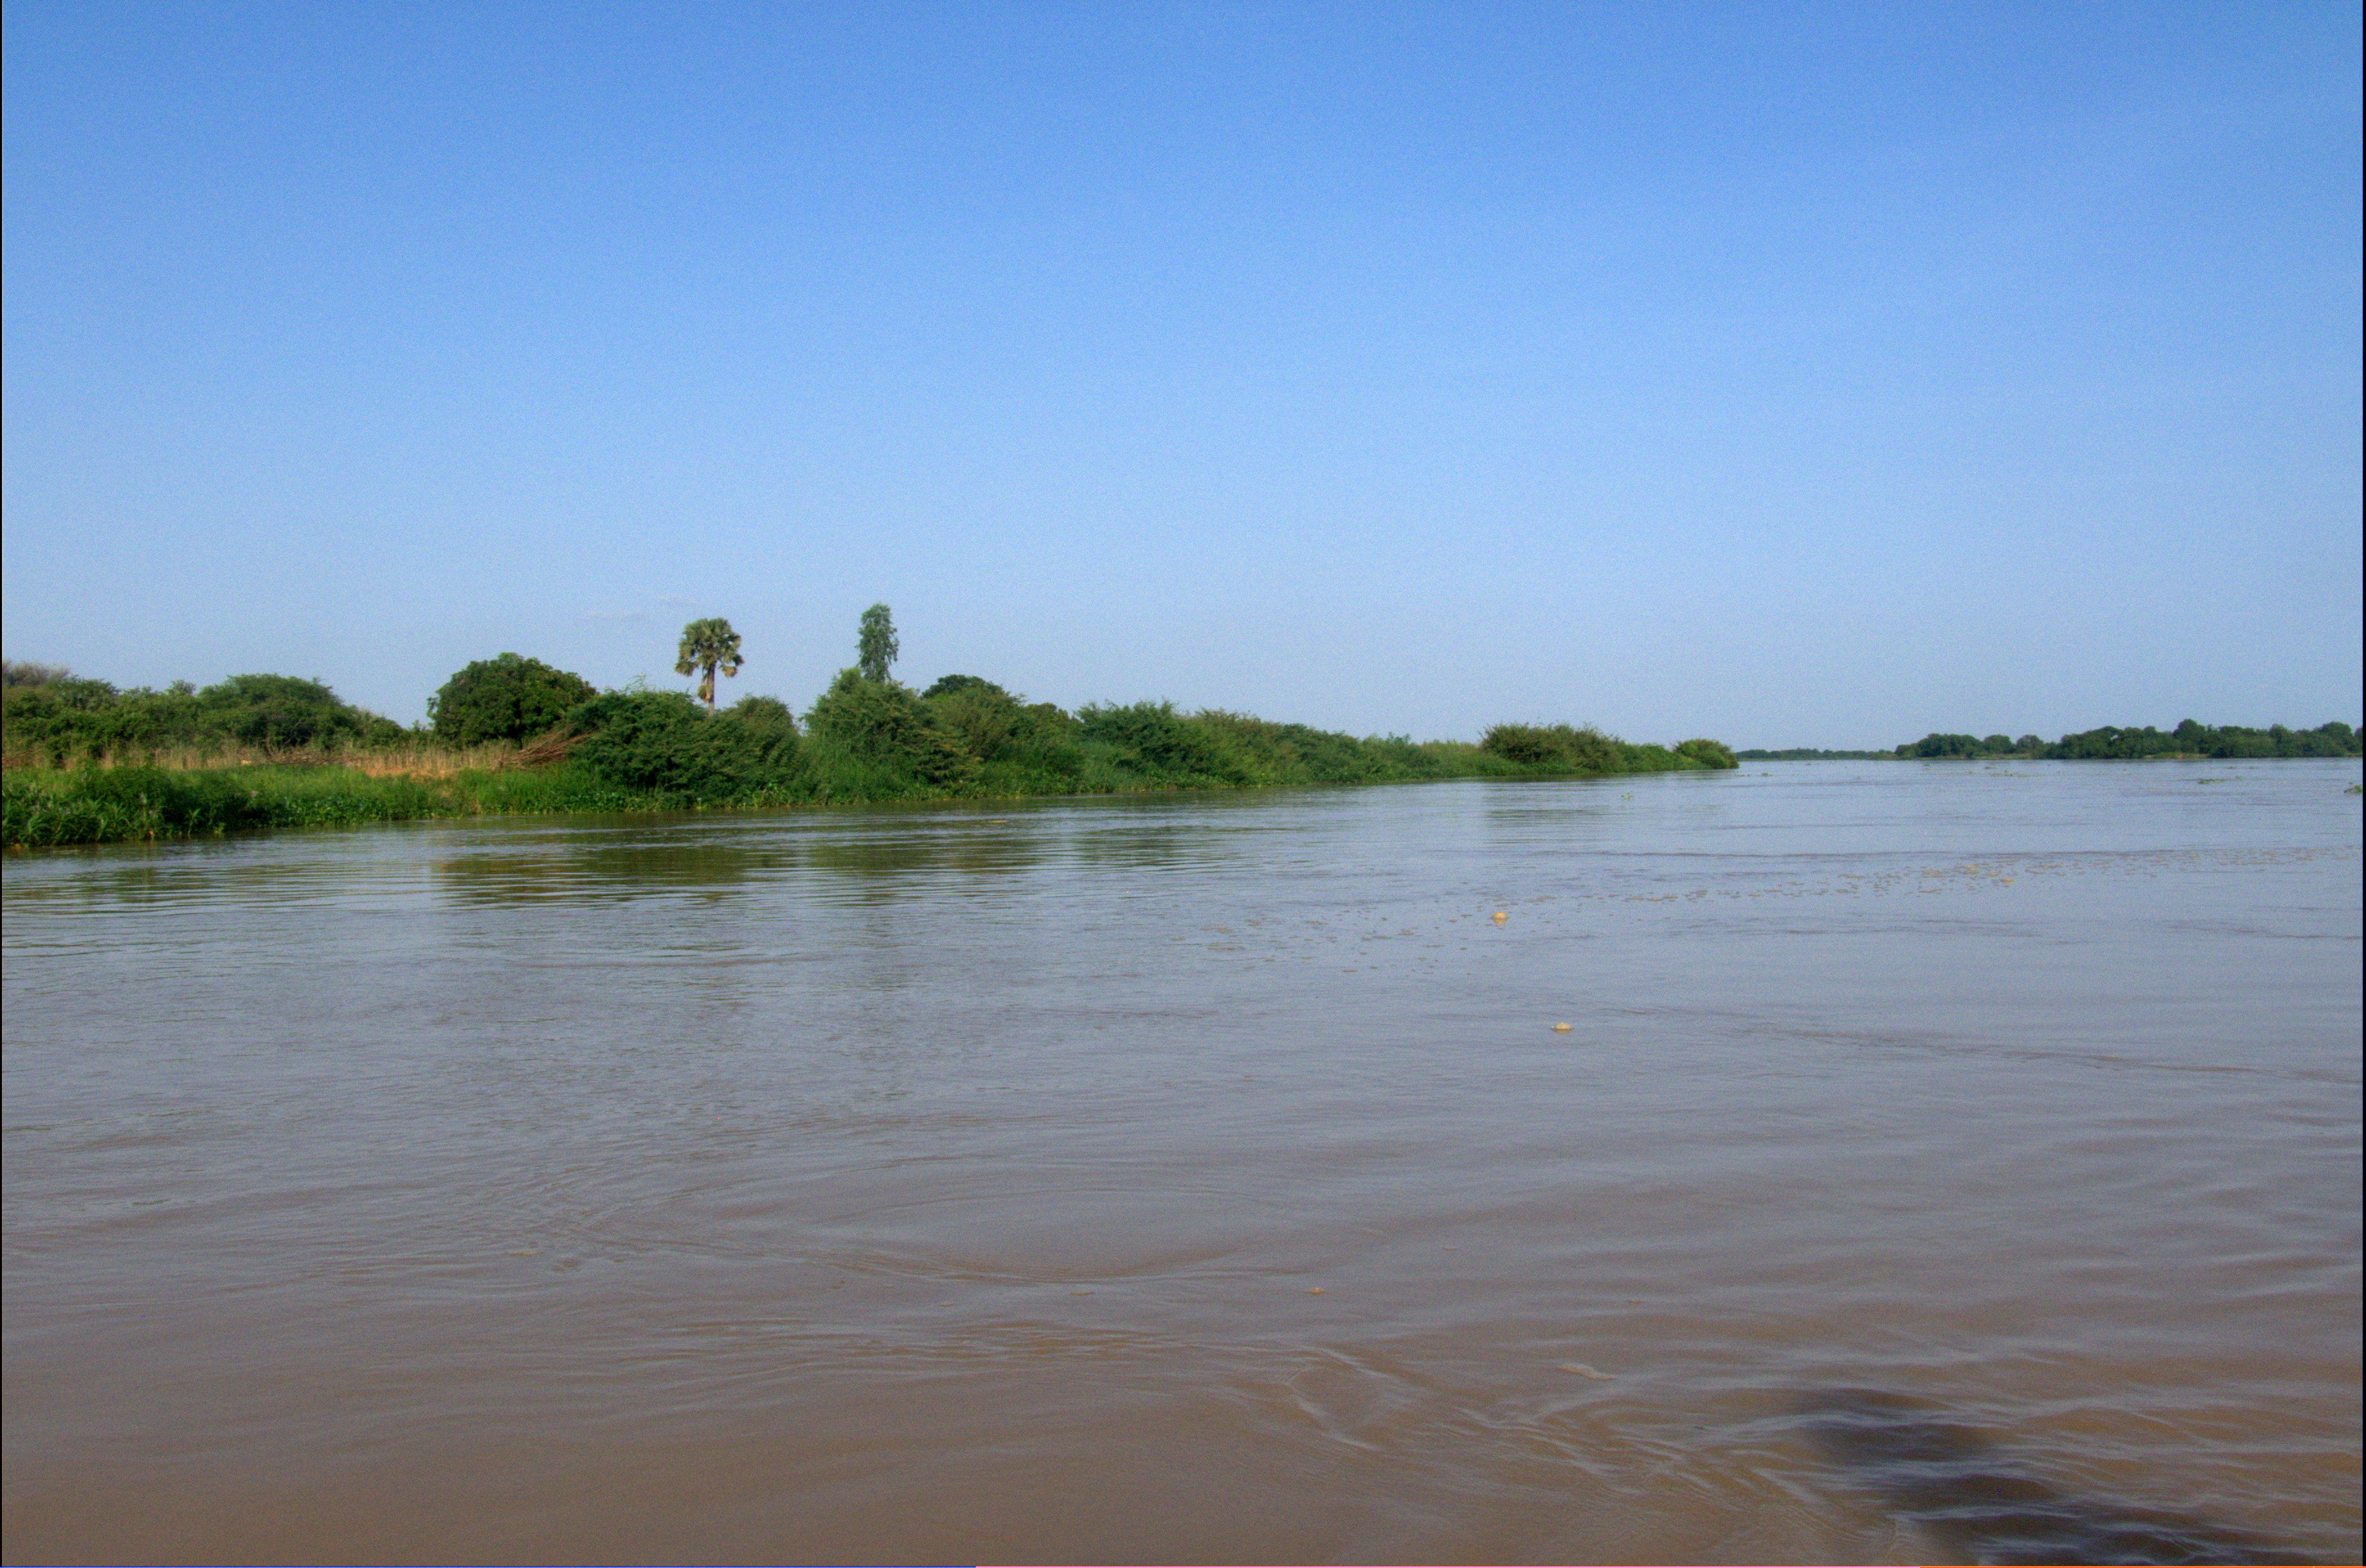 Реки и озера нигерии. Излучина реки нигер. Река Бенуэ. Река нигер в Африке. Река нигер в Нигерии.